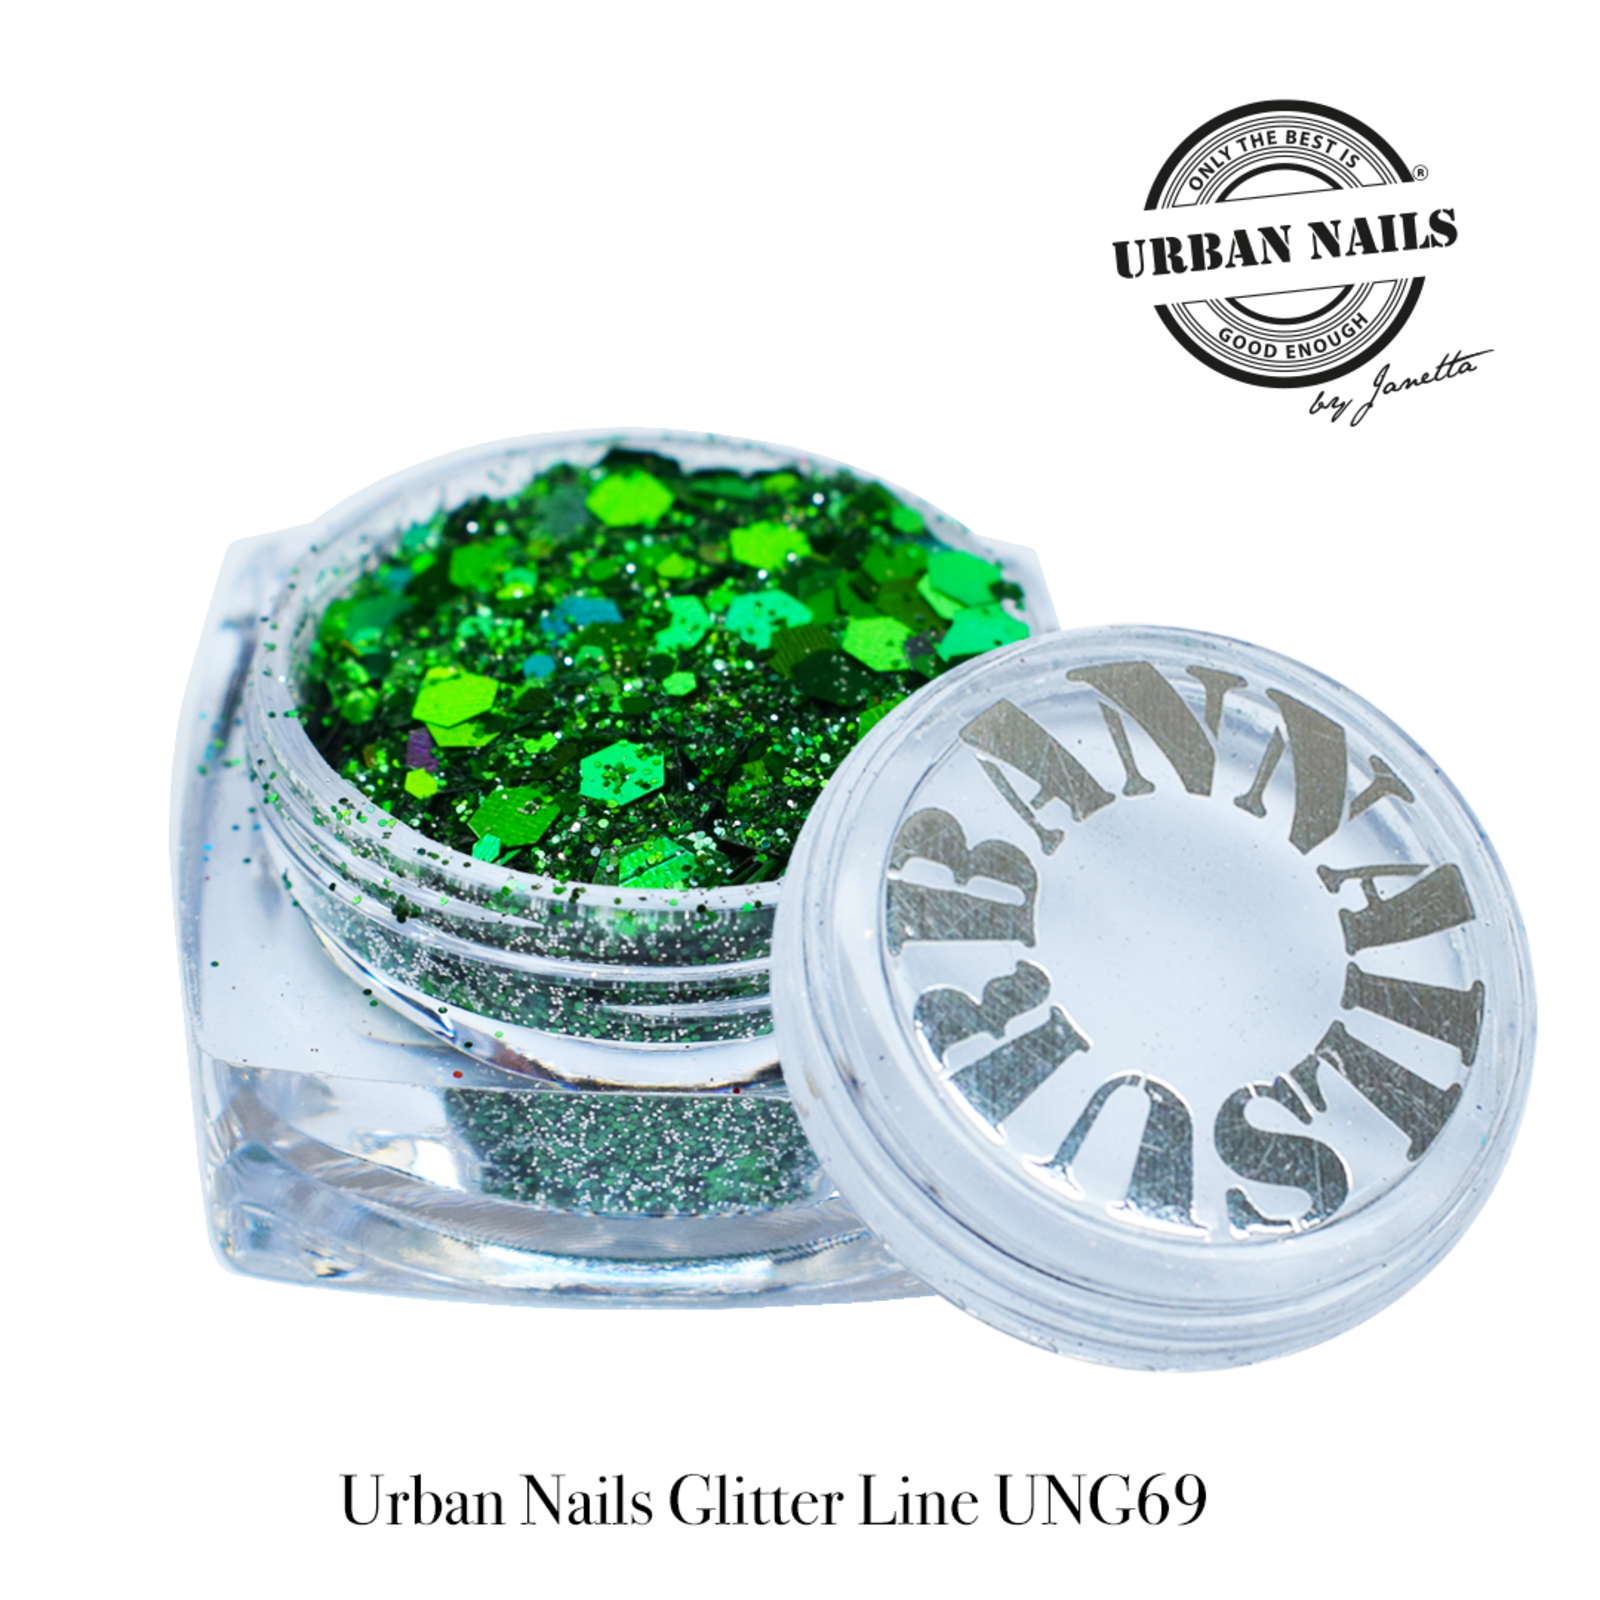 Urban nails Glitter Line UNG69